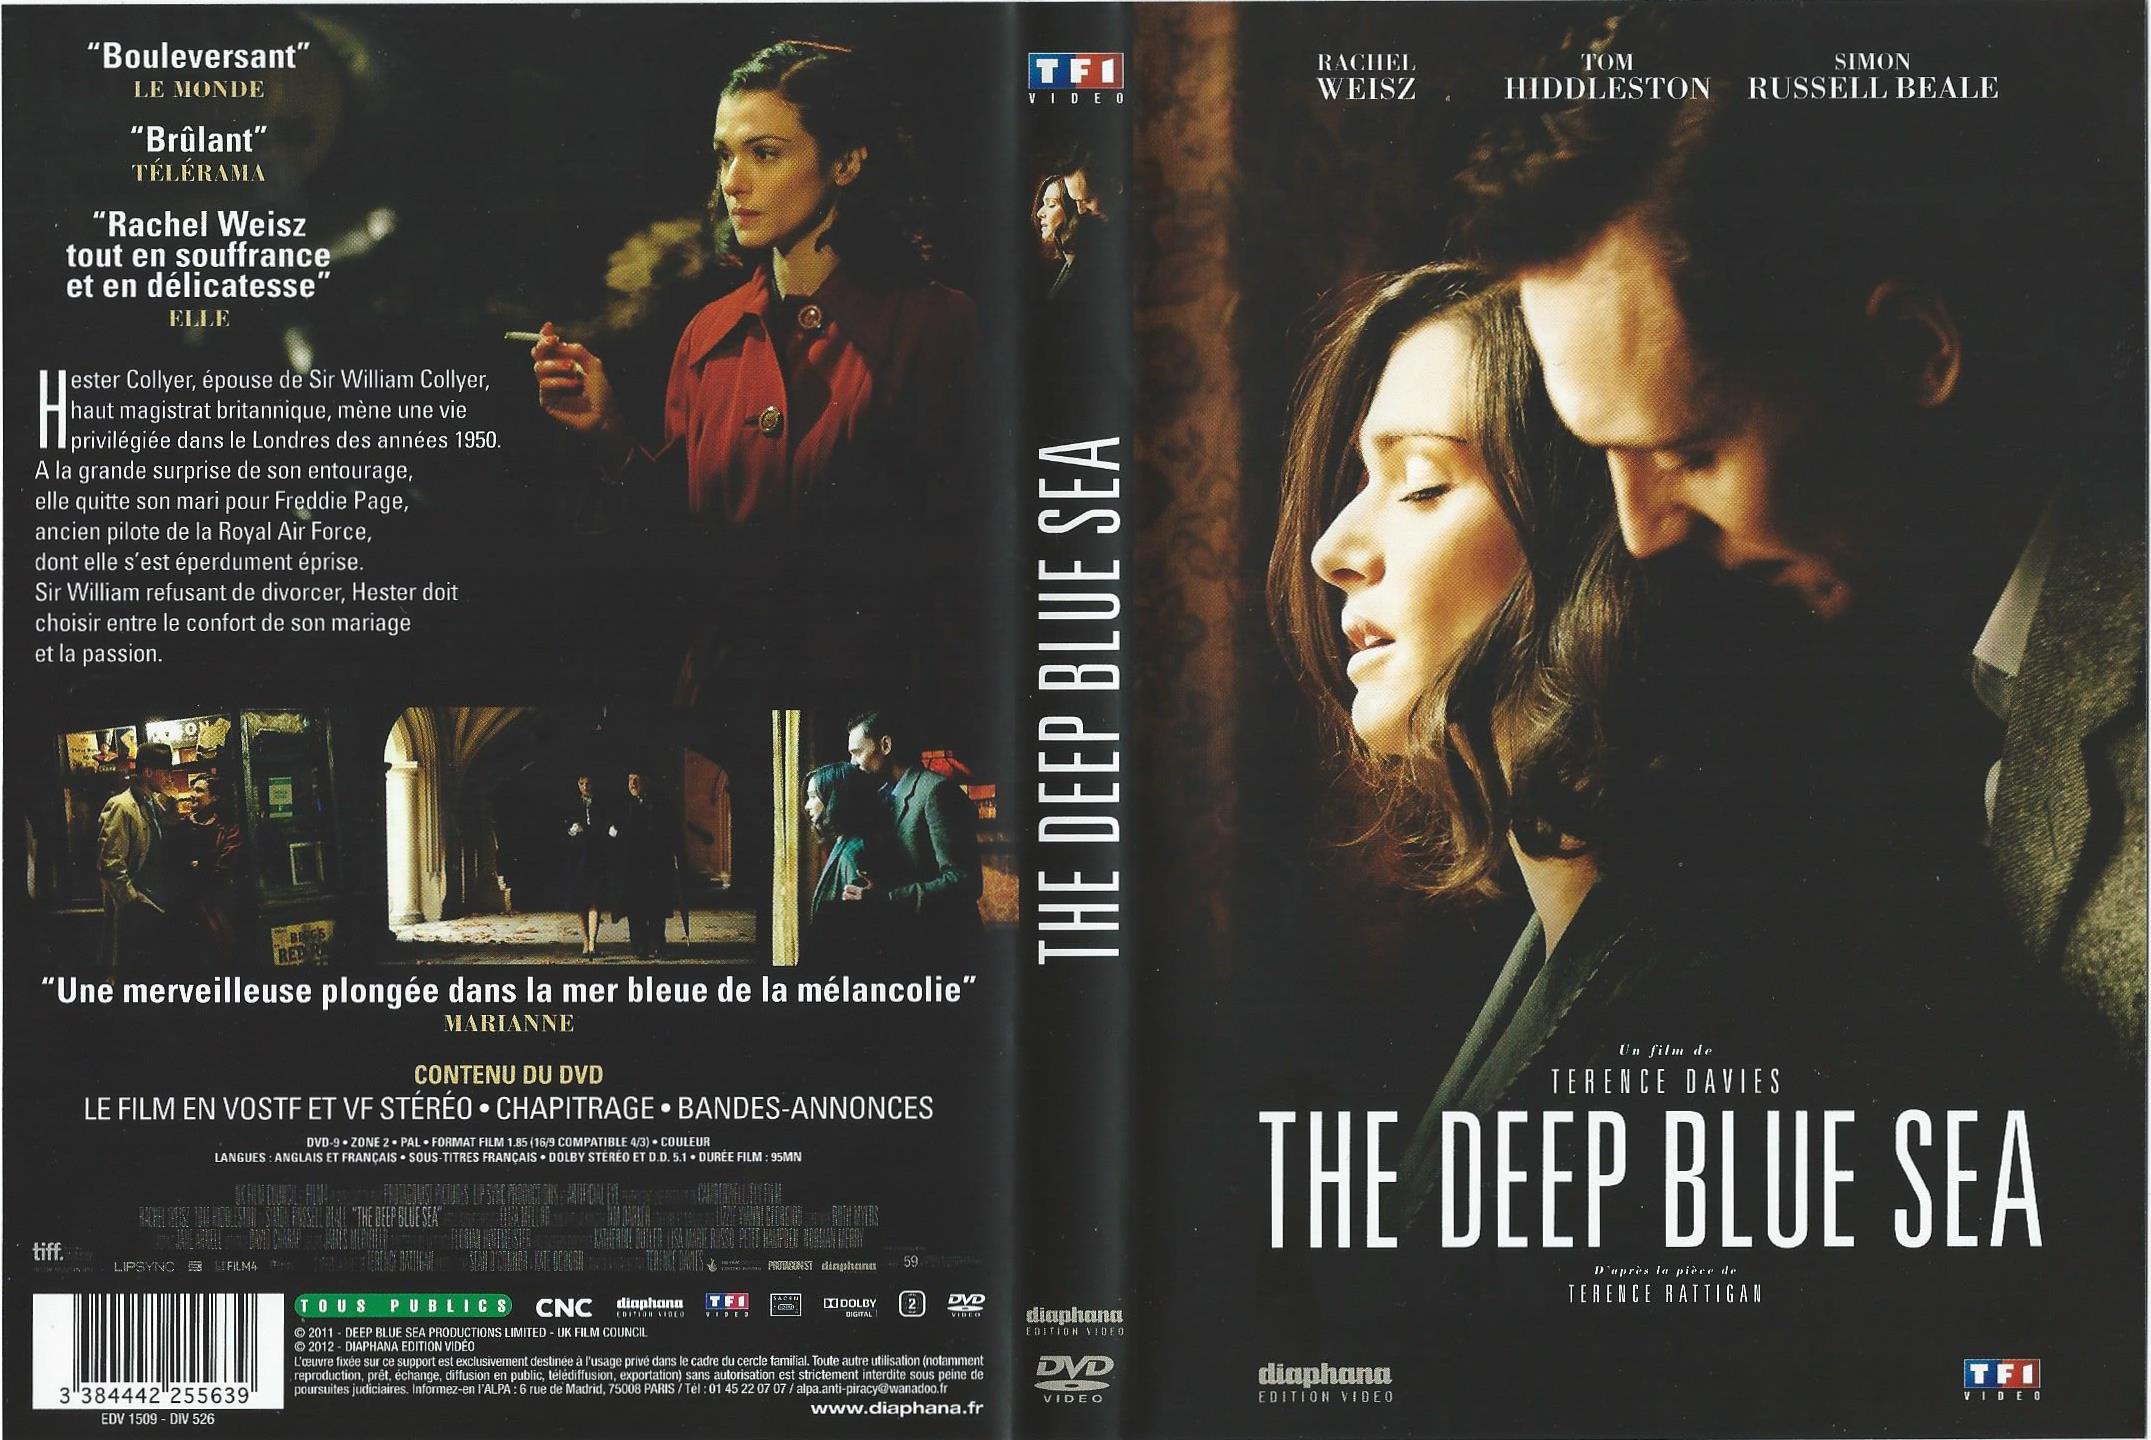 Jaquette DVD The deep blue sea